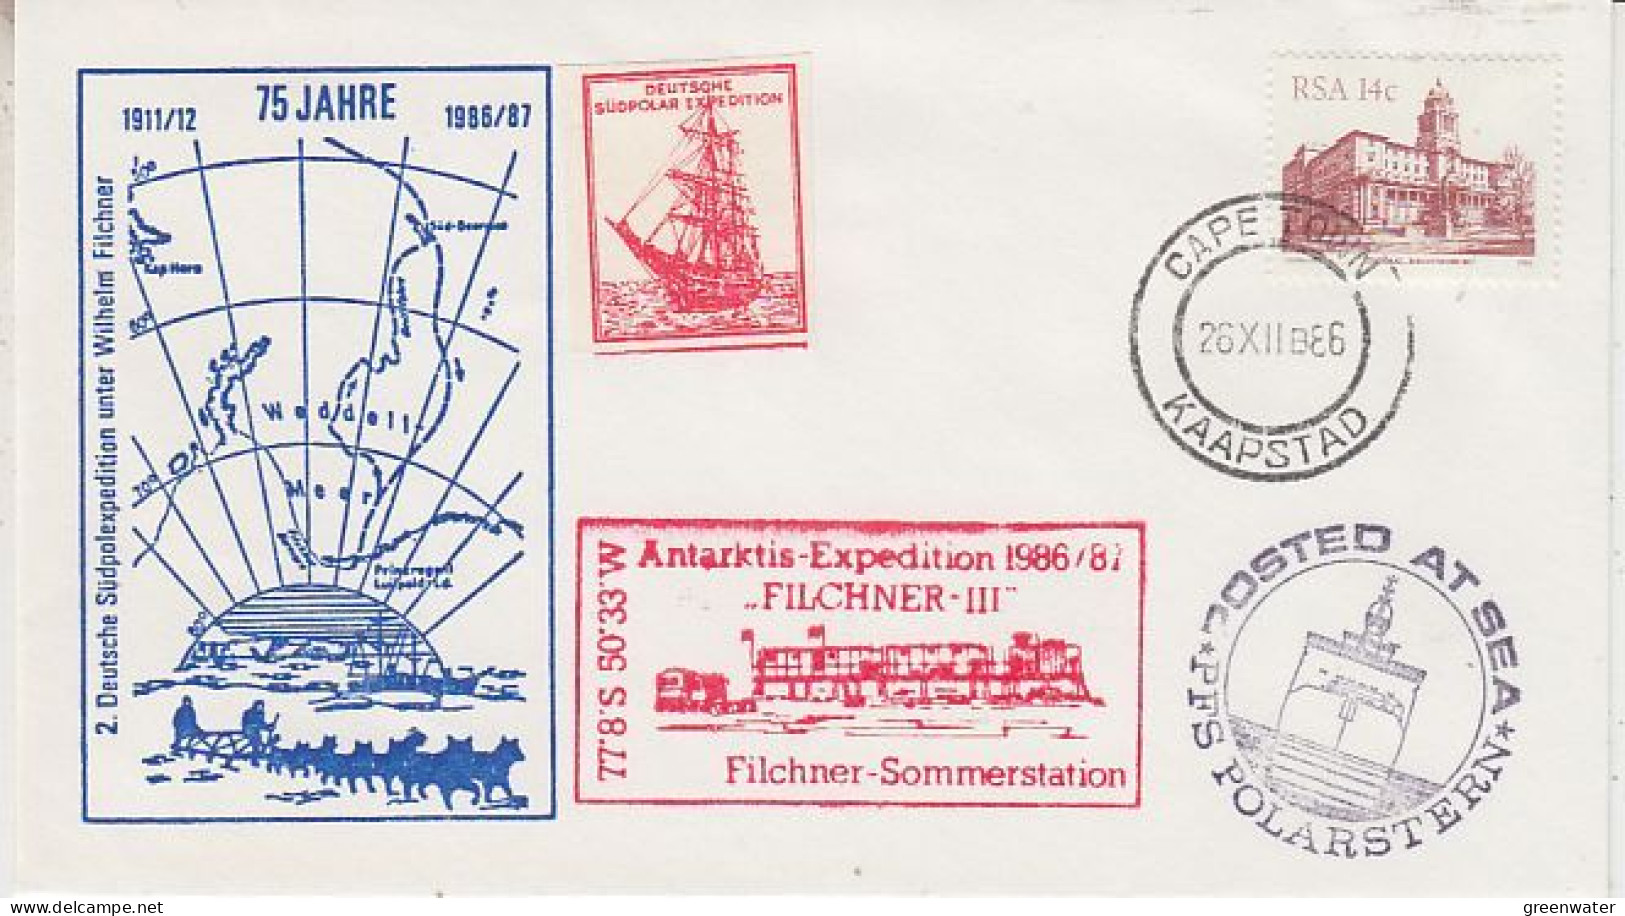 South Africa Antarktis Expedition 1986/87 Filchner III Label Deutsche Ant. Expo Ca Cape Town 26.12.1986 (GS213) - Spedizioni Antartiche